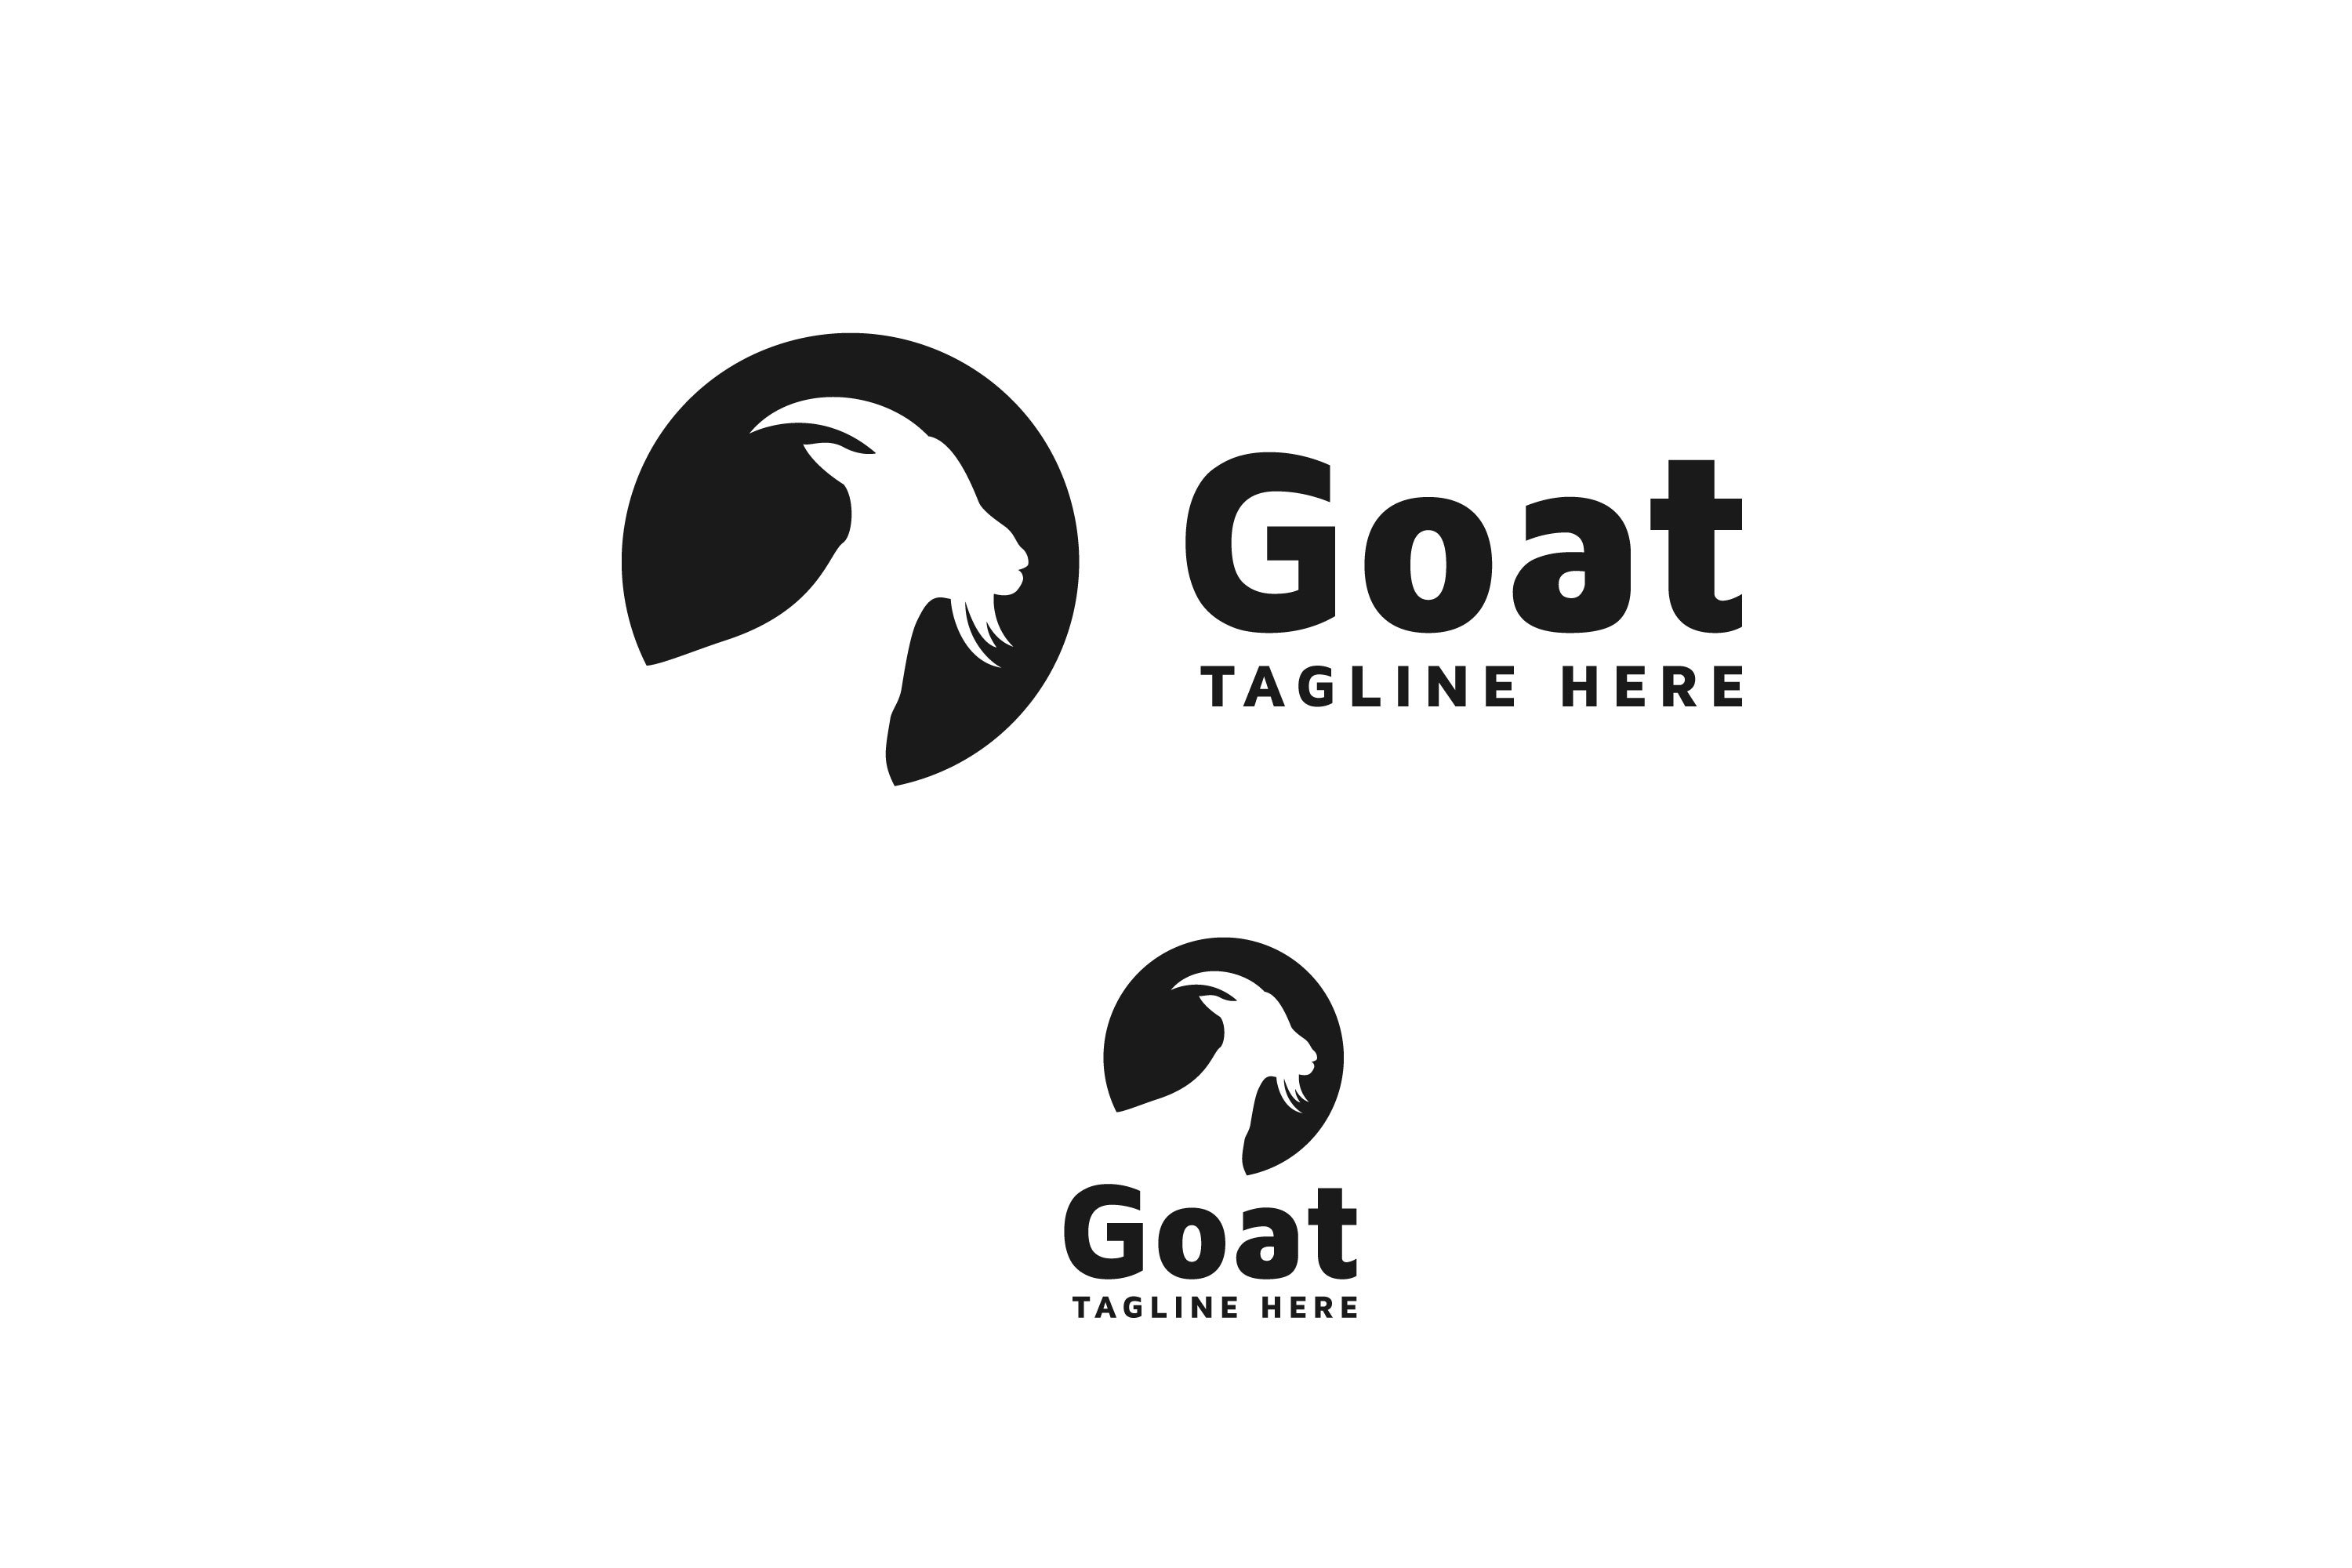 Goat Head Logo Design Vector cover image.